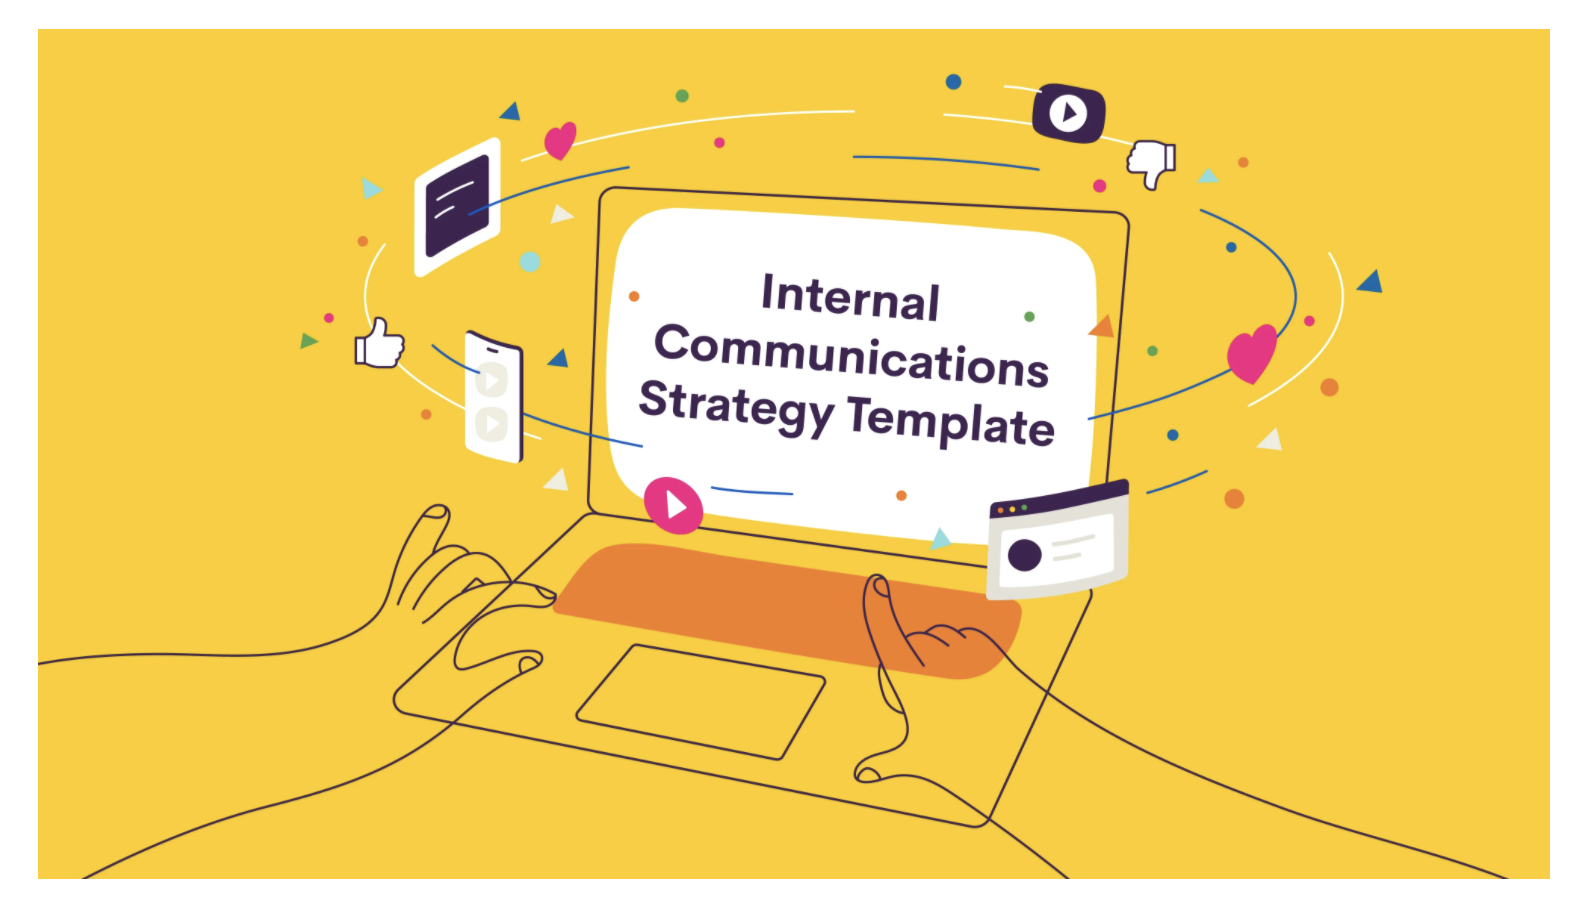 Internal Communications Strategy Template